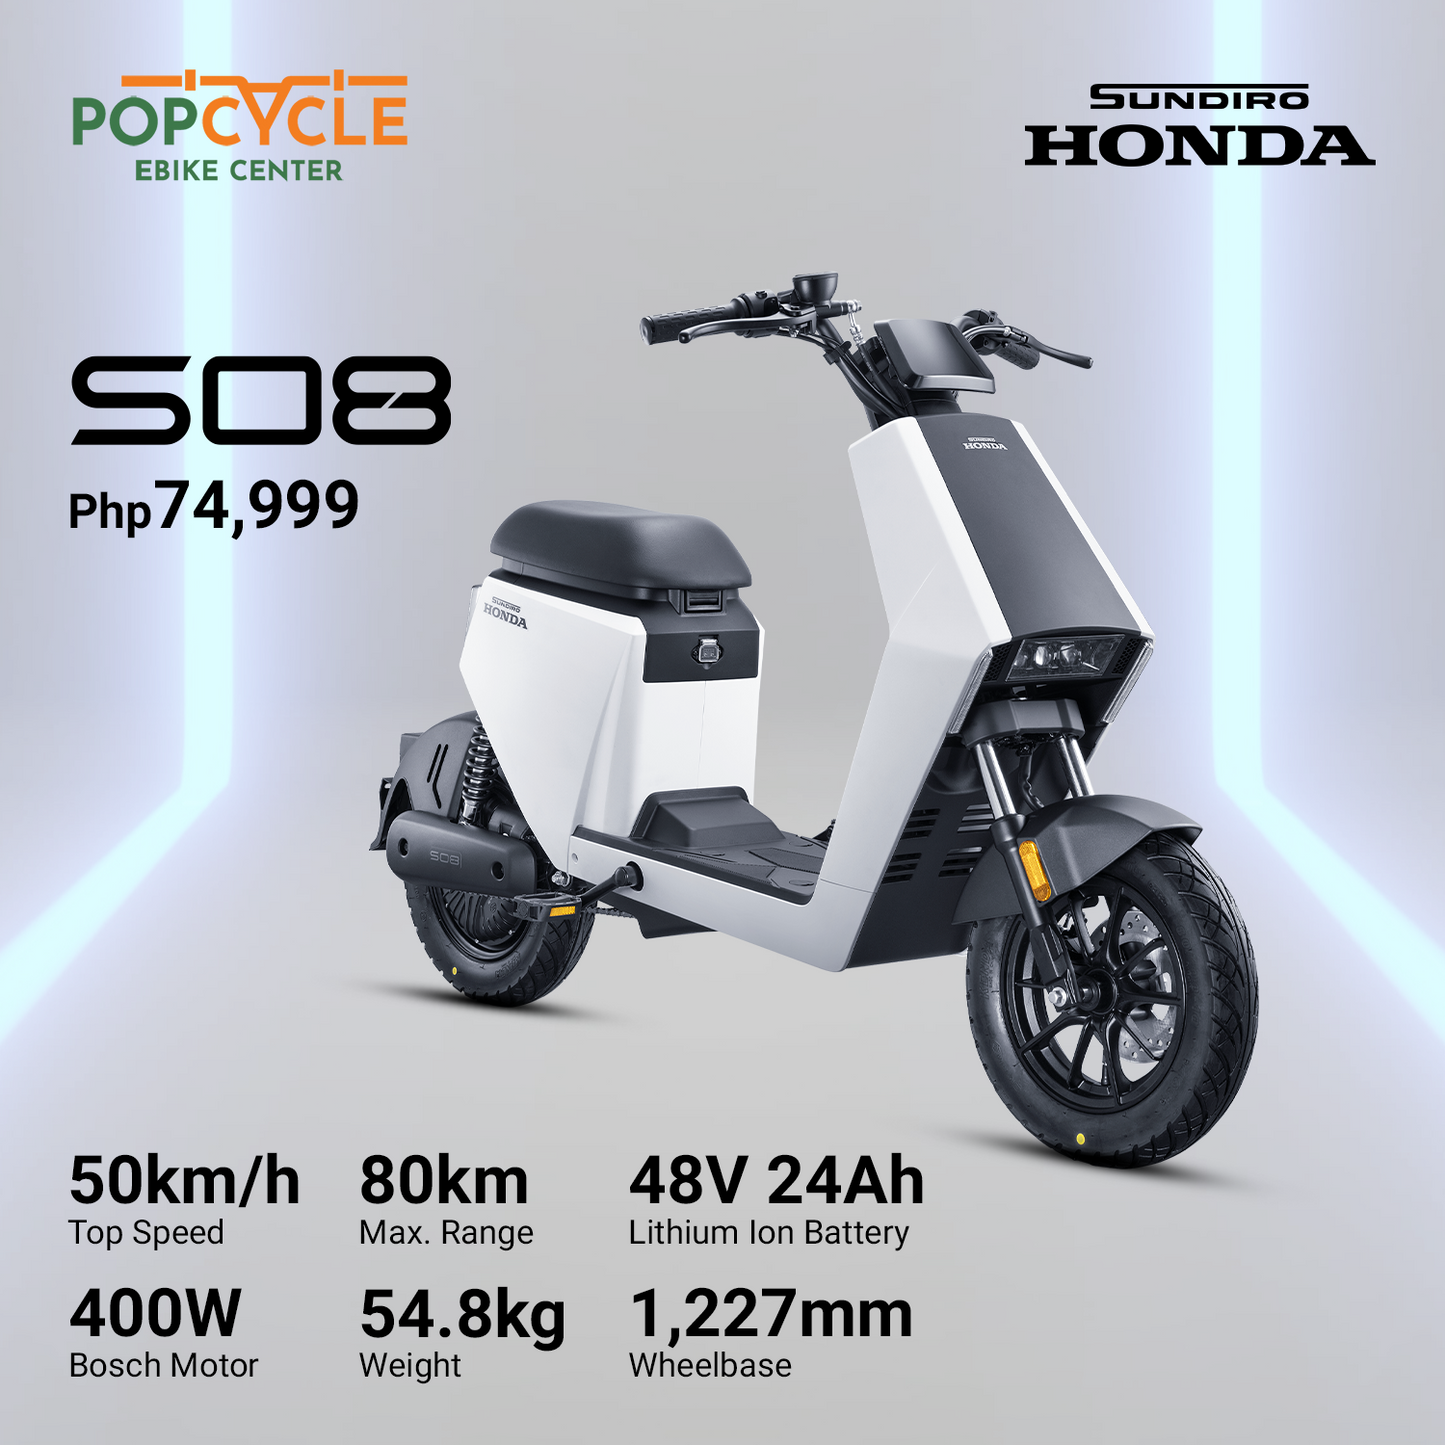 Sundiro Honda S08 Electric Scooter